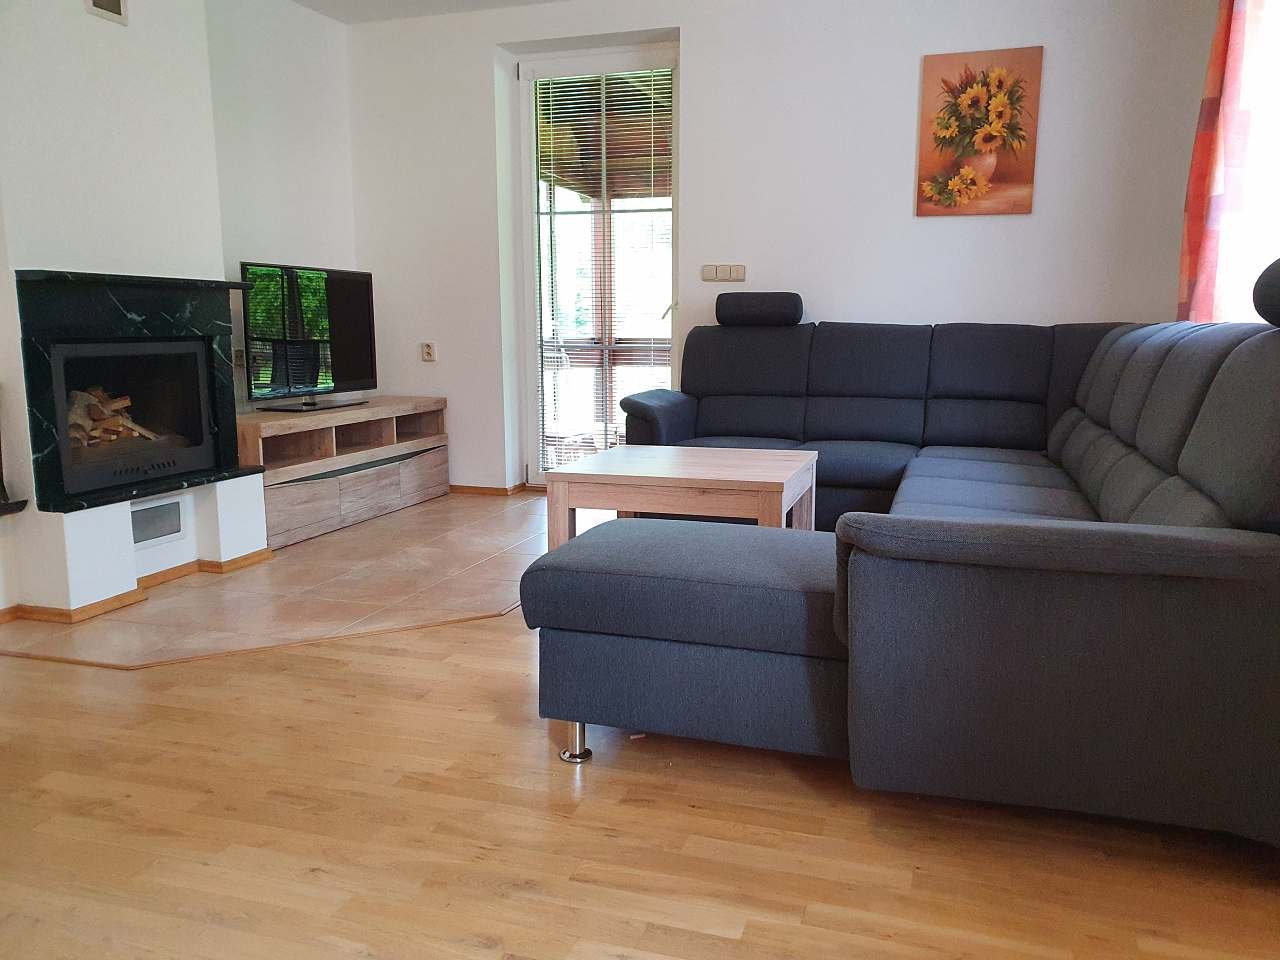 Ground floor apartment - living room